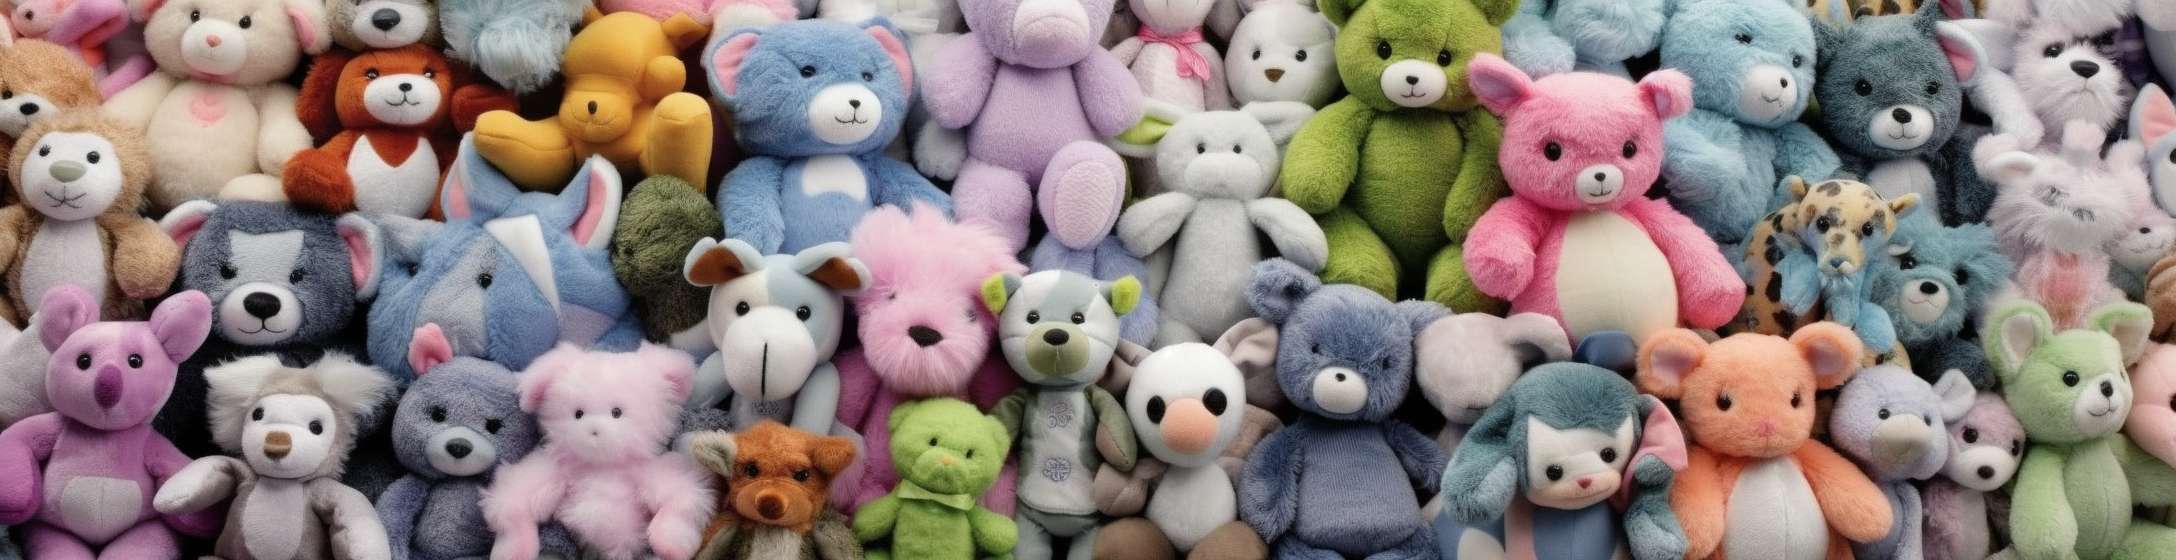 Best Sellers: Best Stuffed Animals & Plush Toys